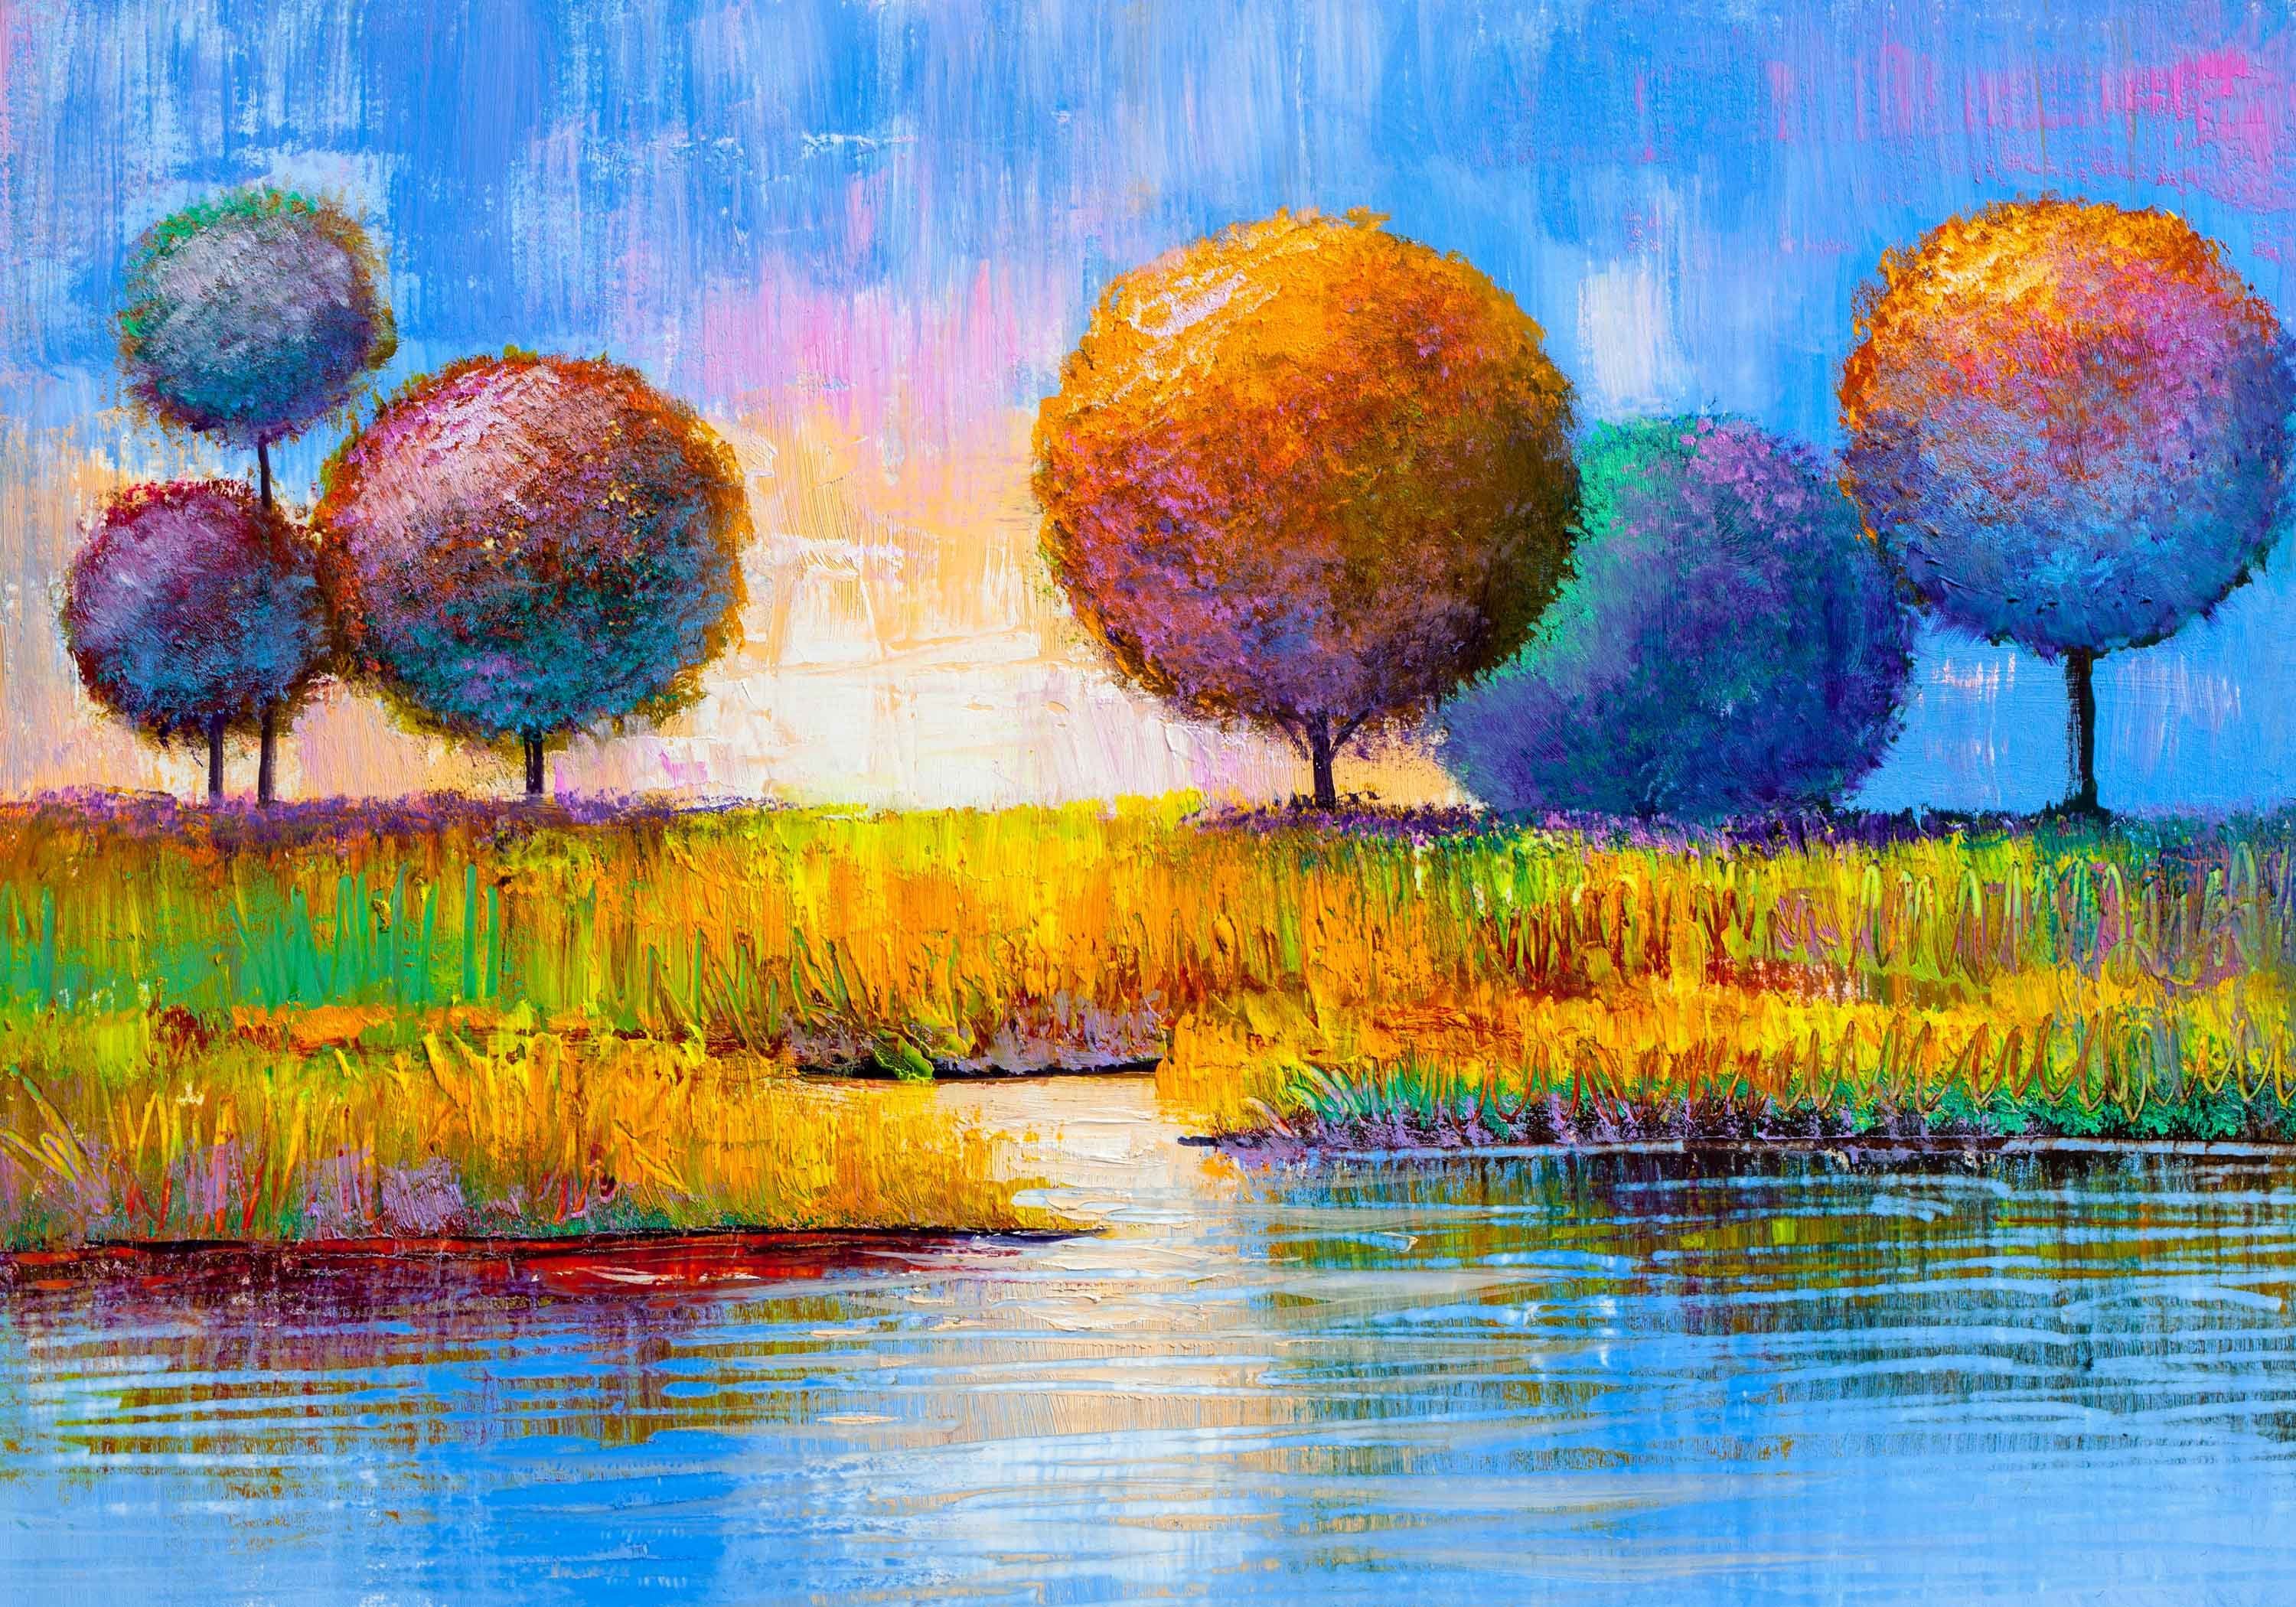 wandmotiv24 Fototapete Gemälde Runde Bäume mit See, glatt, Wandtapete, Motivtapete, matt, Vliestapete